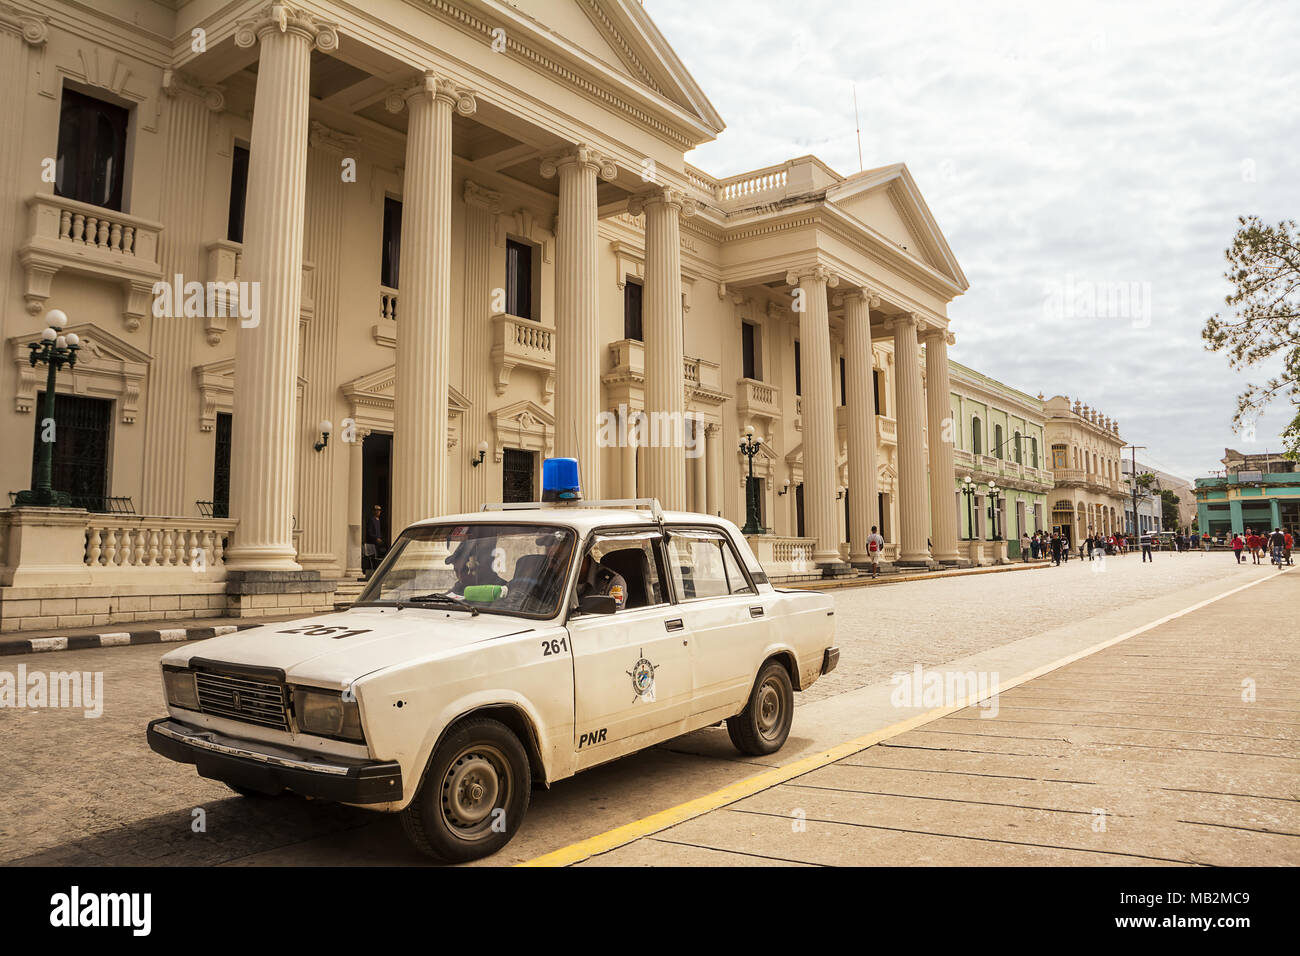 Santa Clara, Cuba - Decembere 10, 2017: Cuban police car in the square in Santa Clara on a Sunday in December Stock Photo